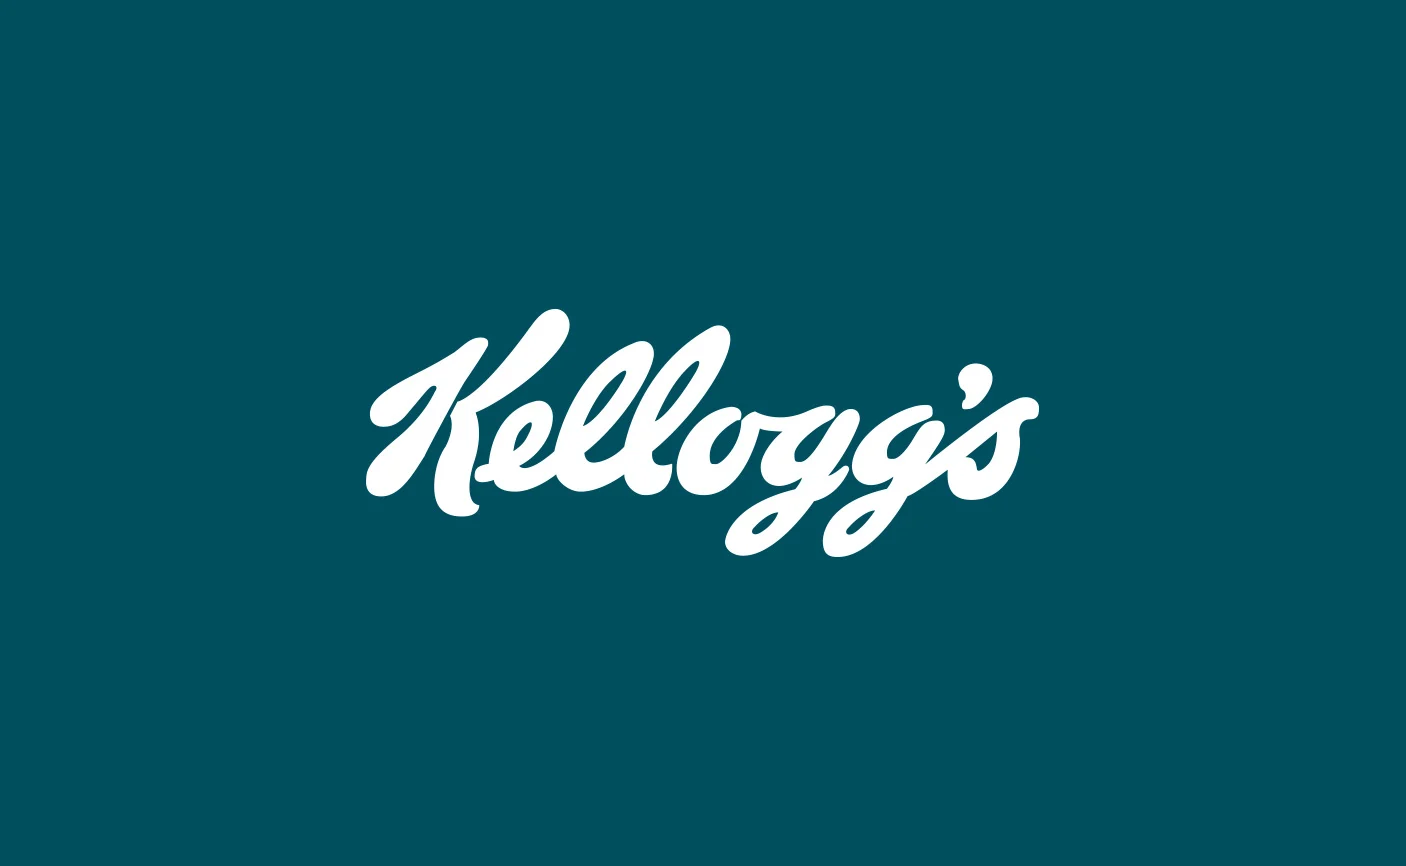 Kelloggs - customer testimonial and customer reference